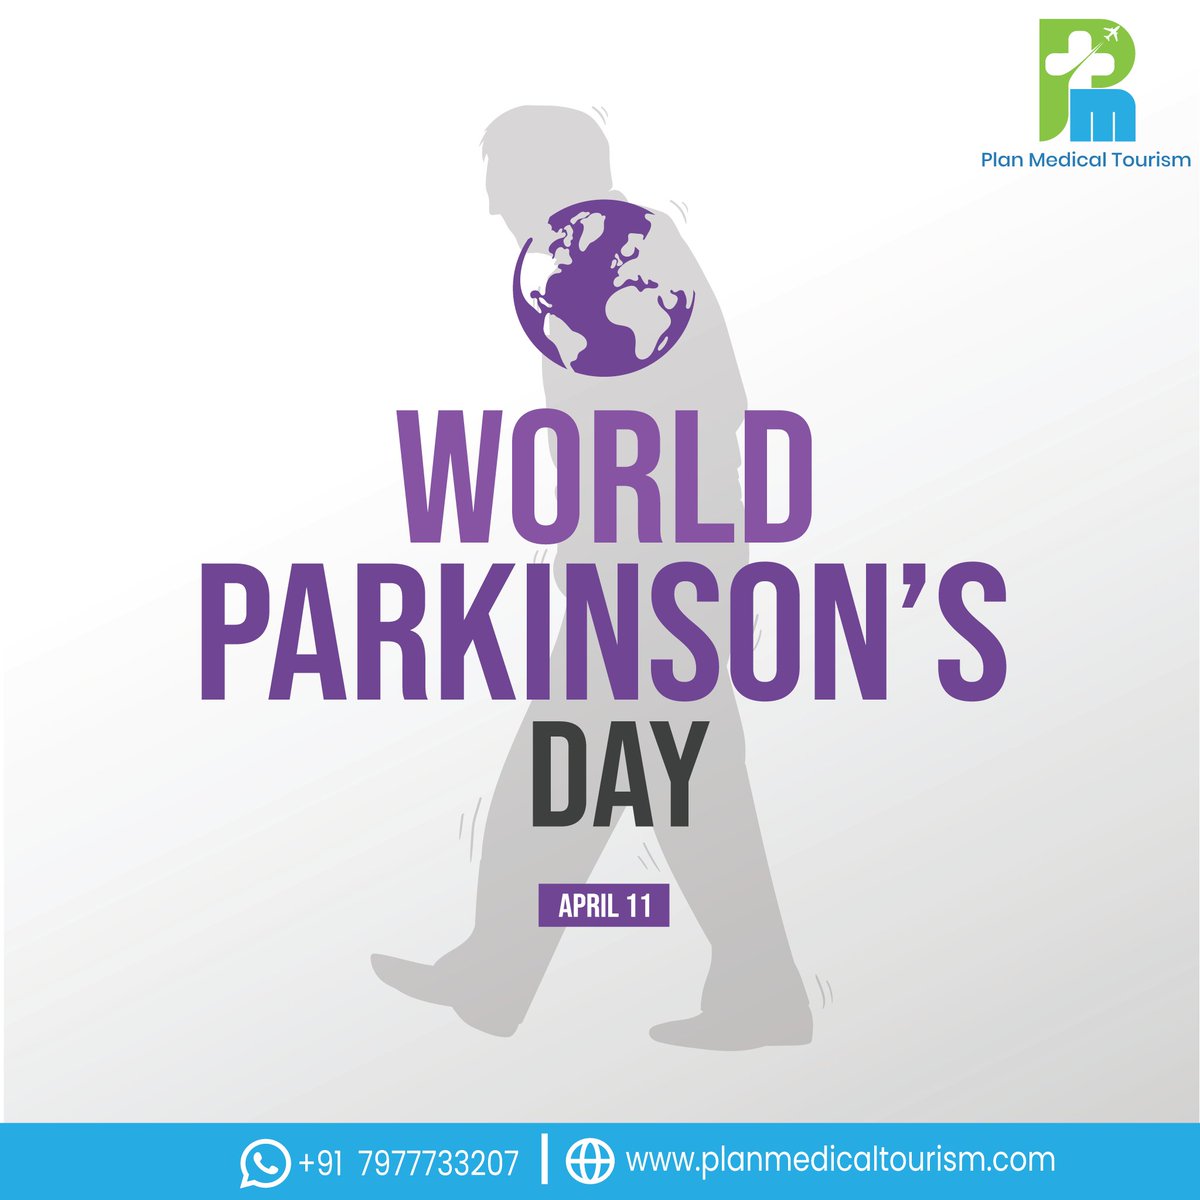 World Parkinson’s Day
#parkinsons  #parkinsonsdisease  #parkinsonsawareness